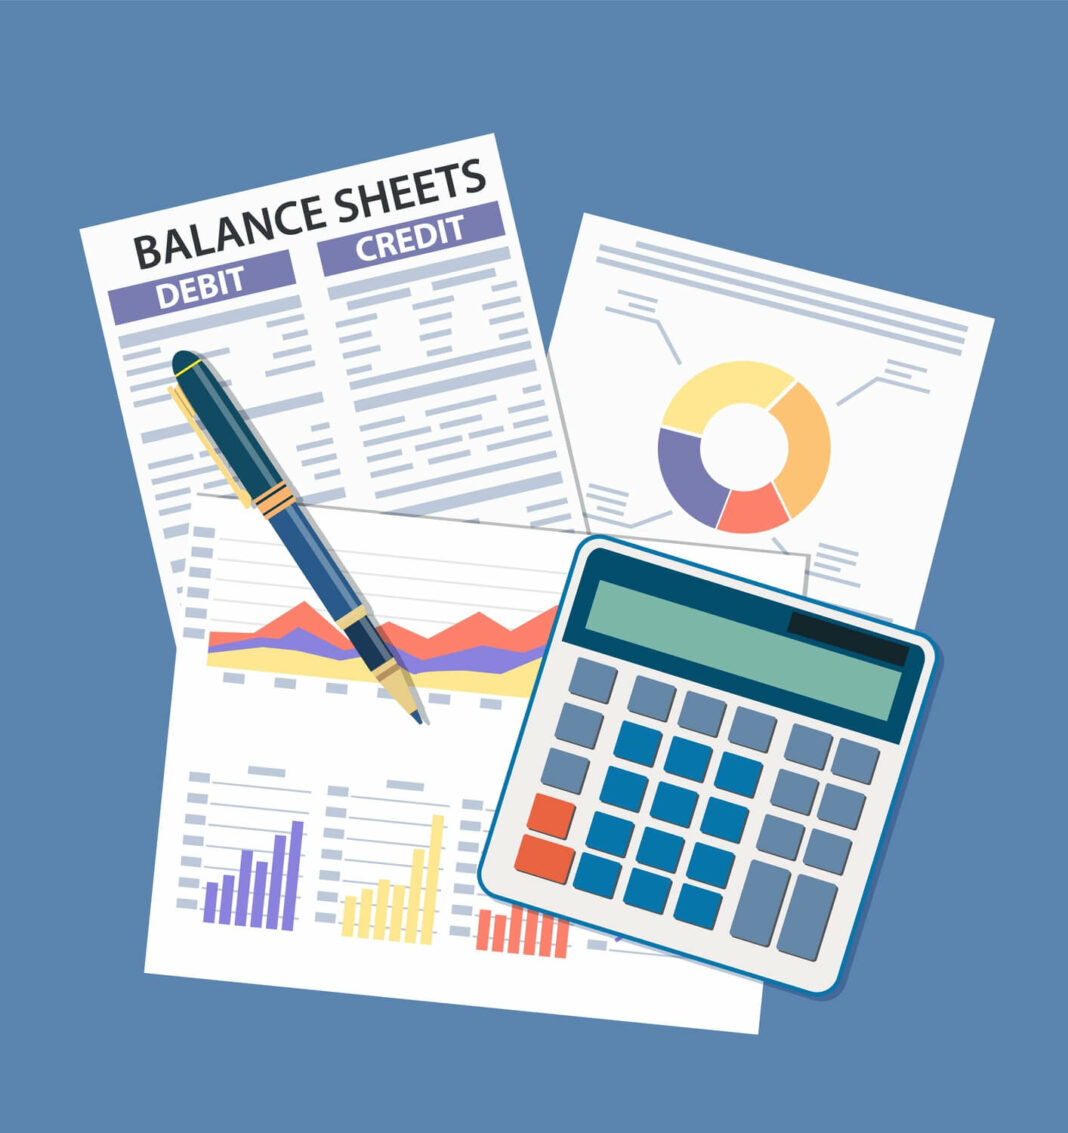 Balance Sheet Infographic Image